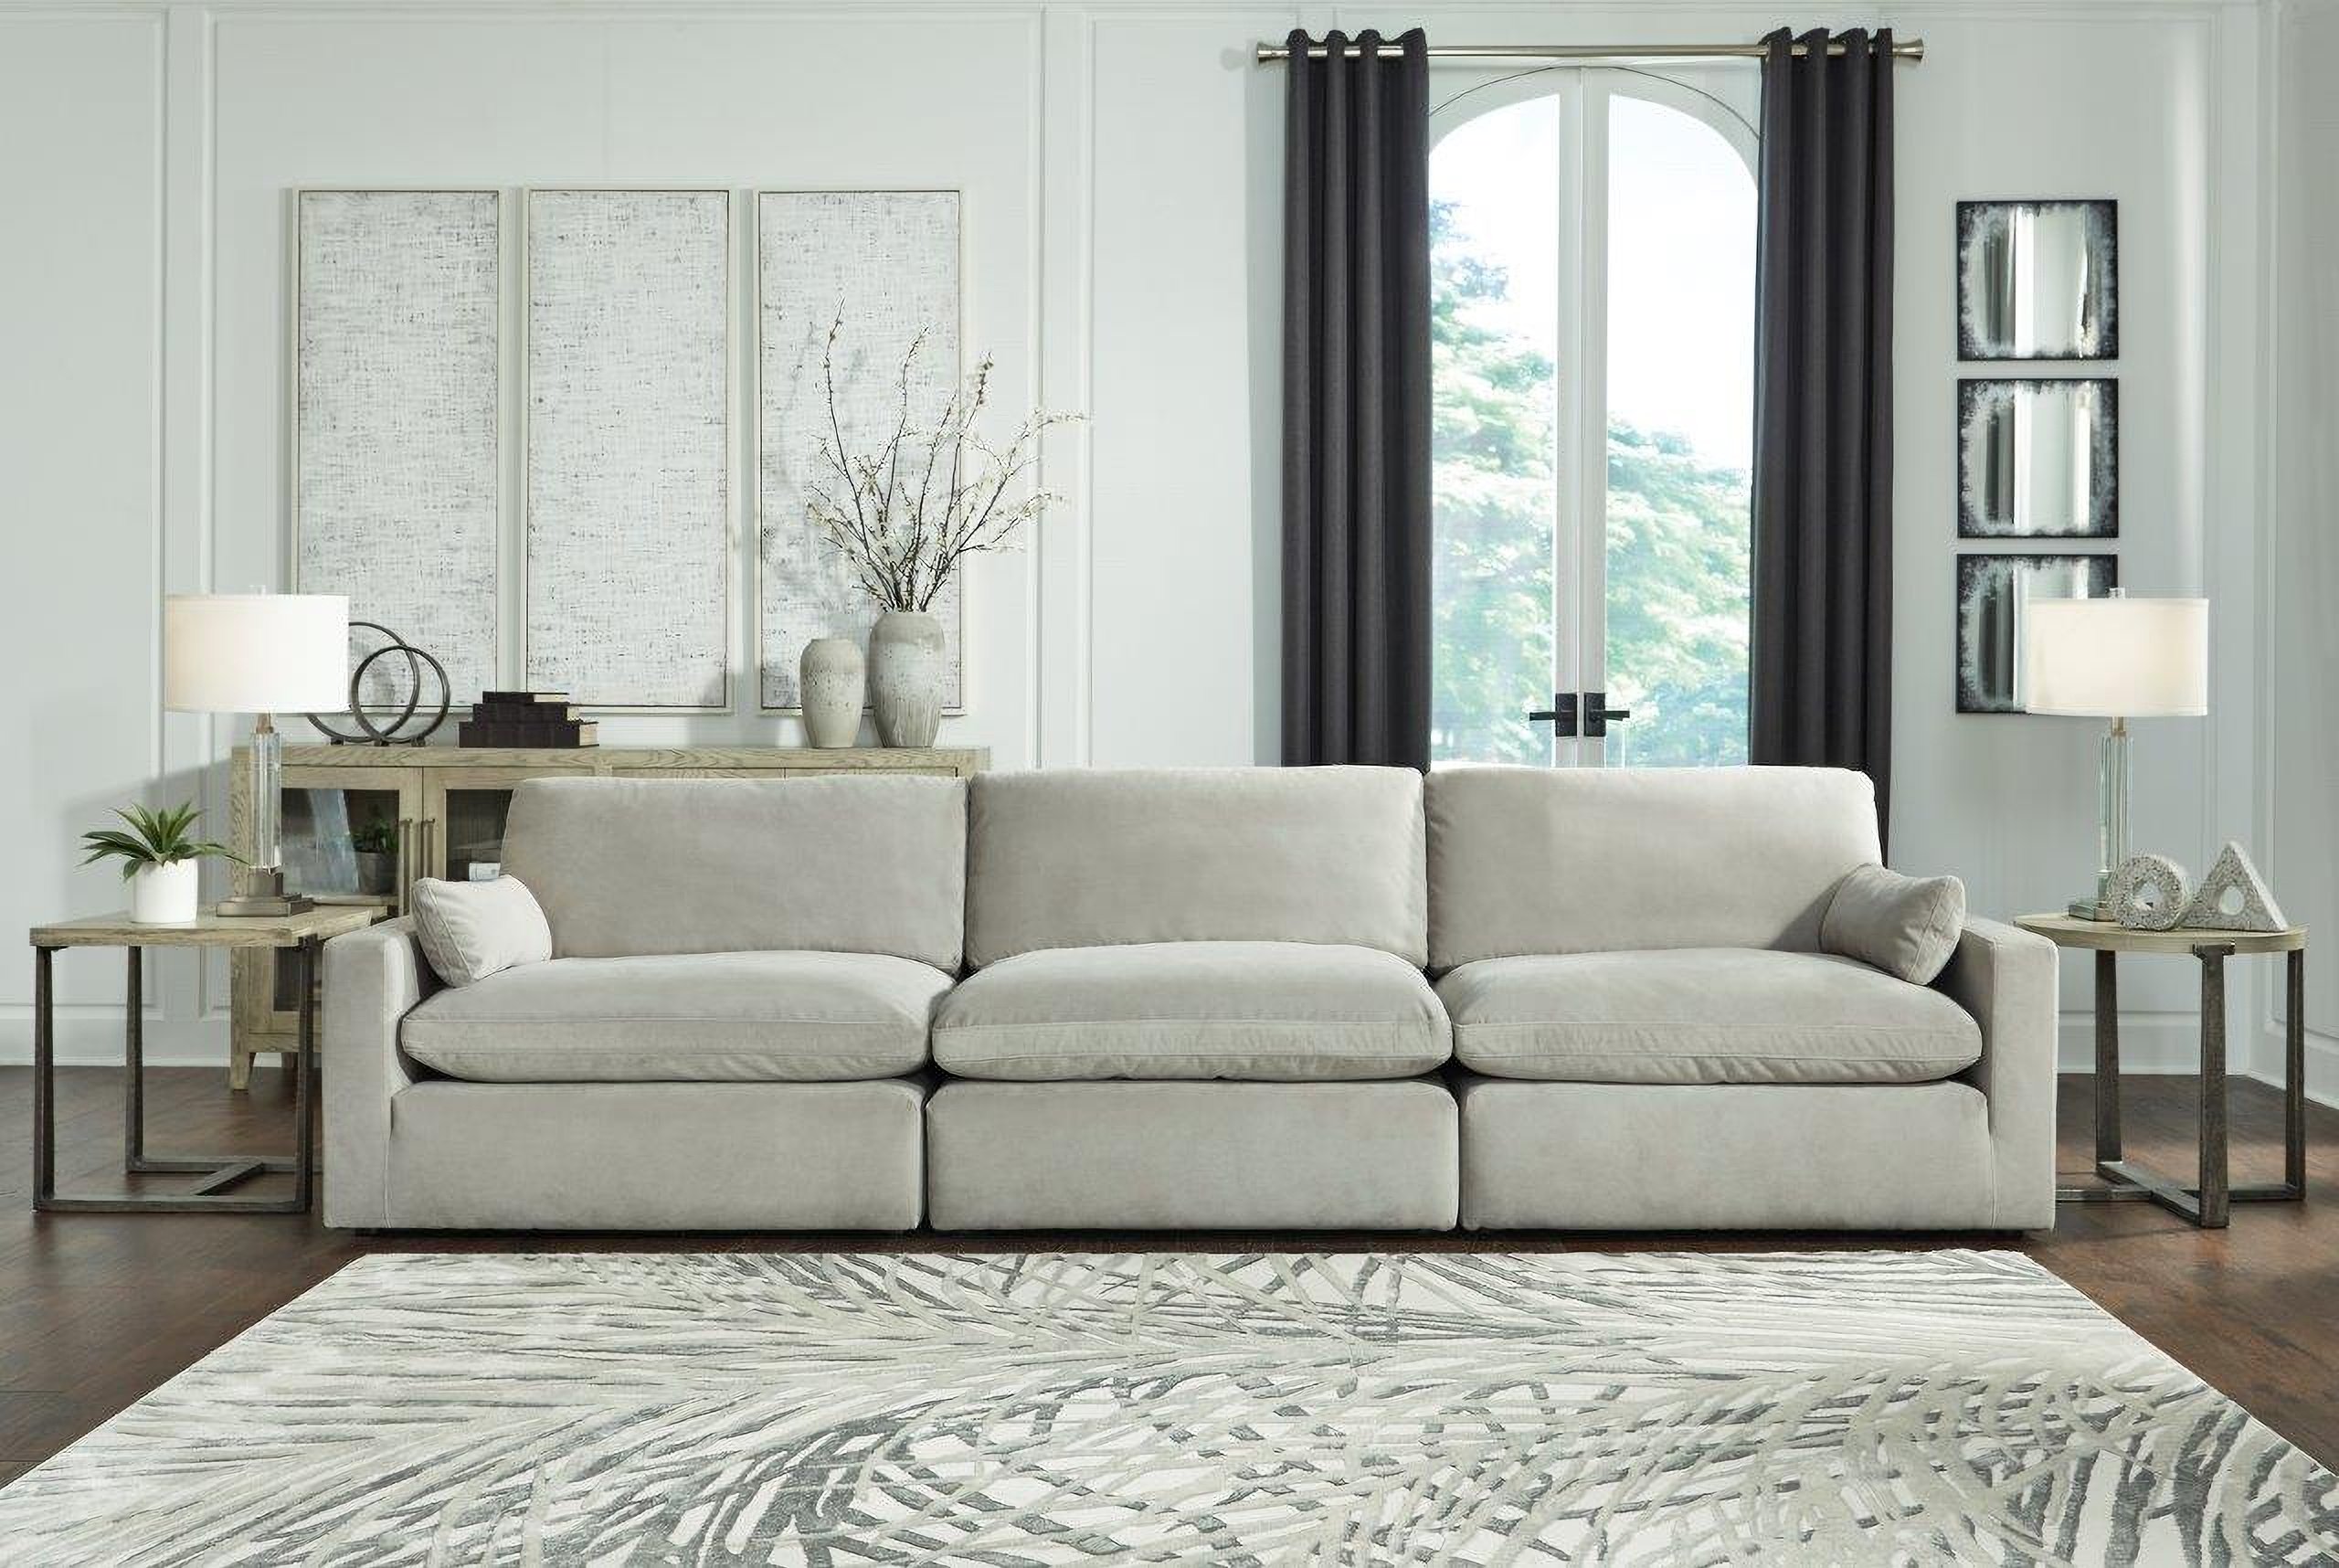 Sophie Modular Sofa In Gray By Ashley